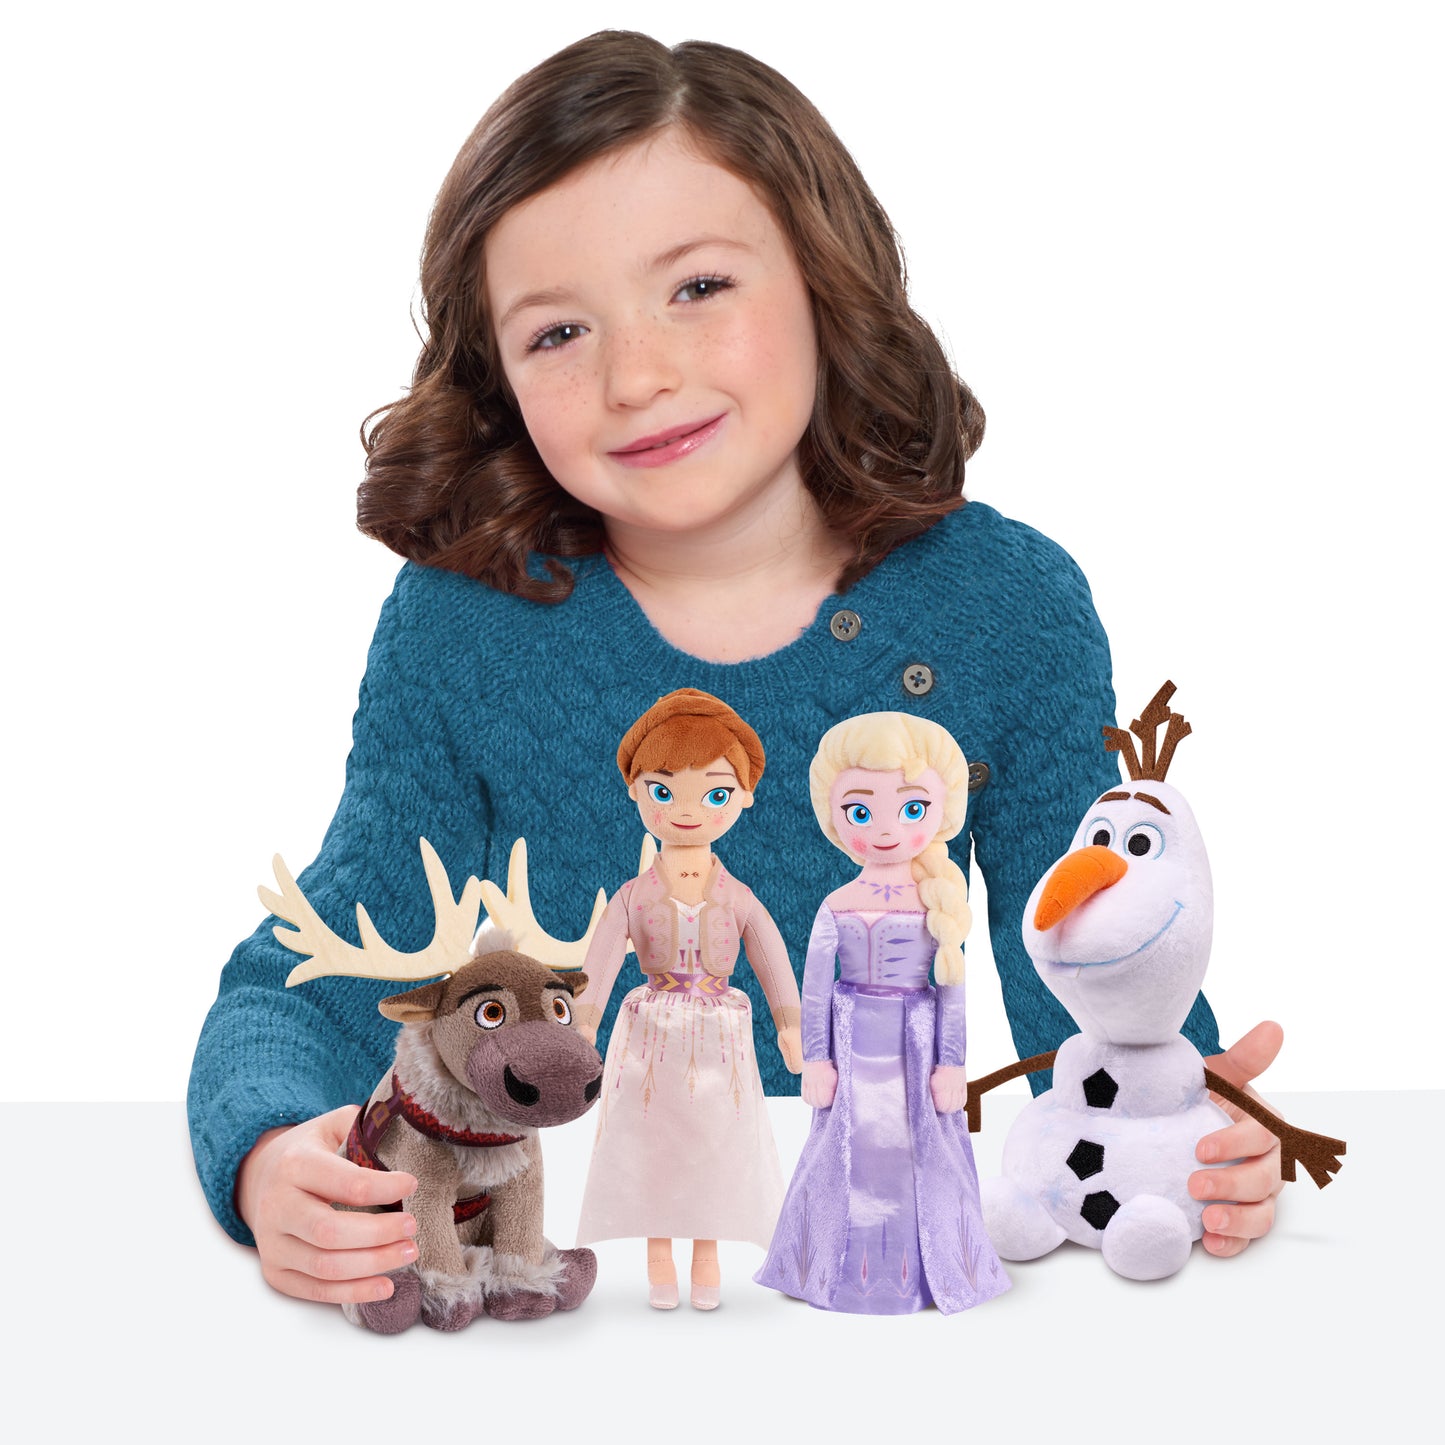 Disney Frozen 2 Small Plush Assortment: Olaf, Anna, Elsa and Sven